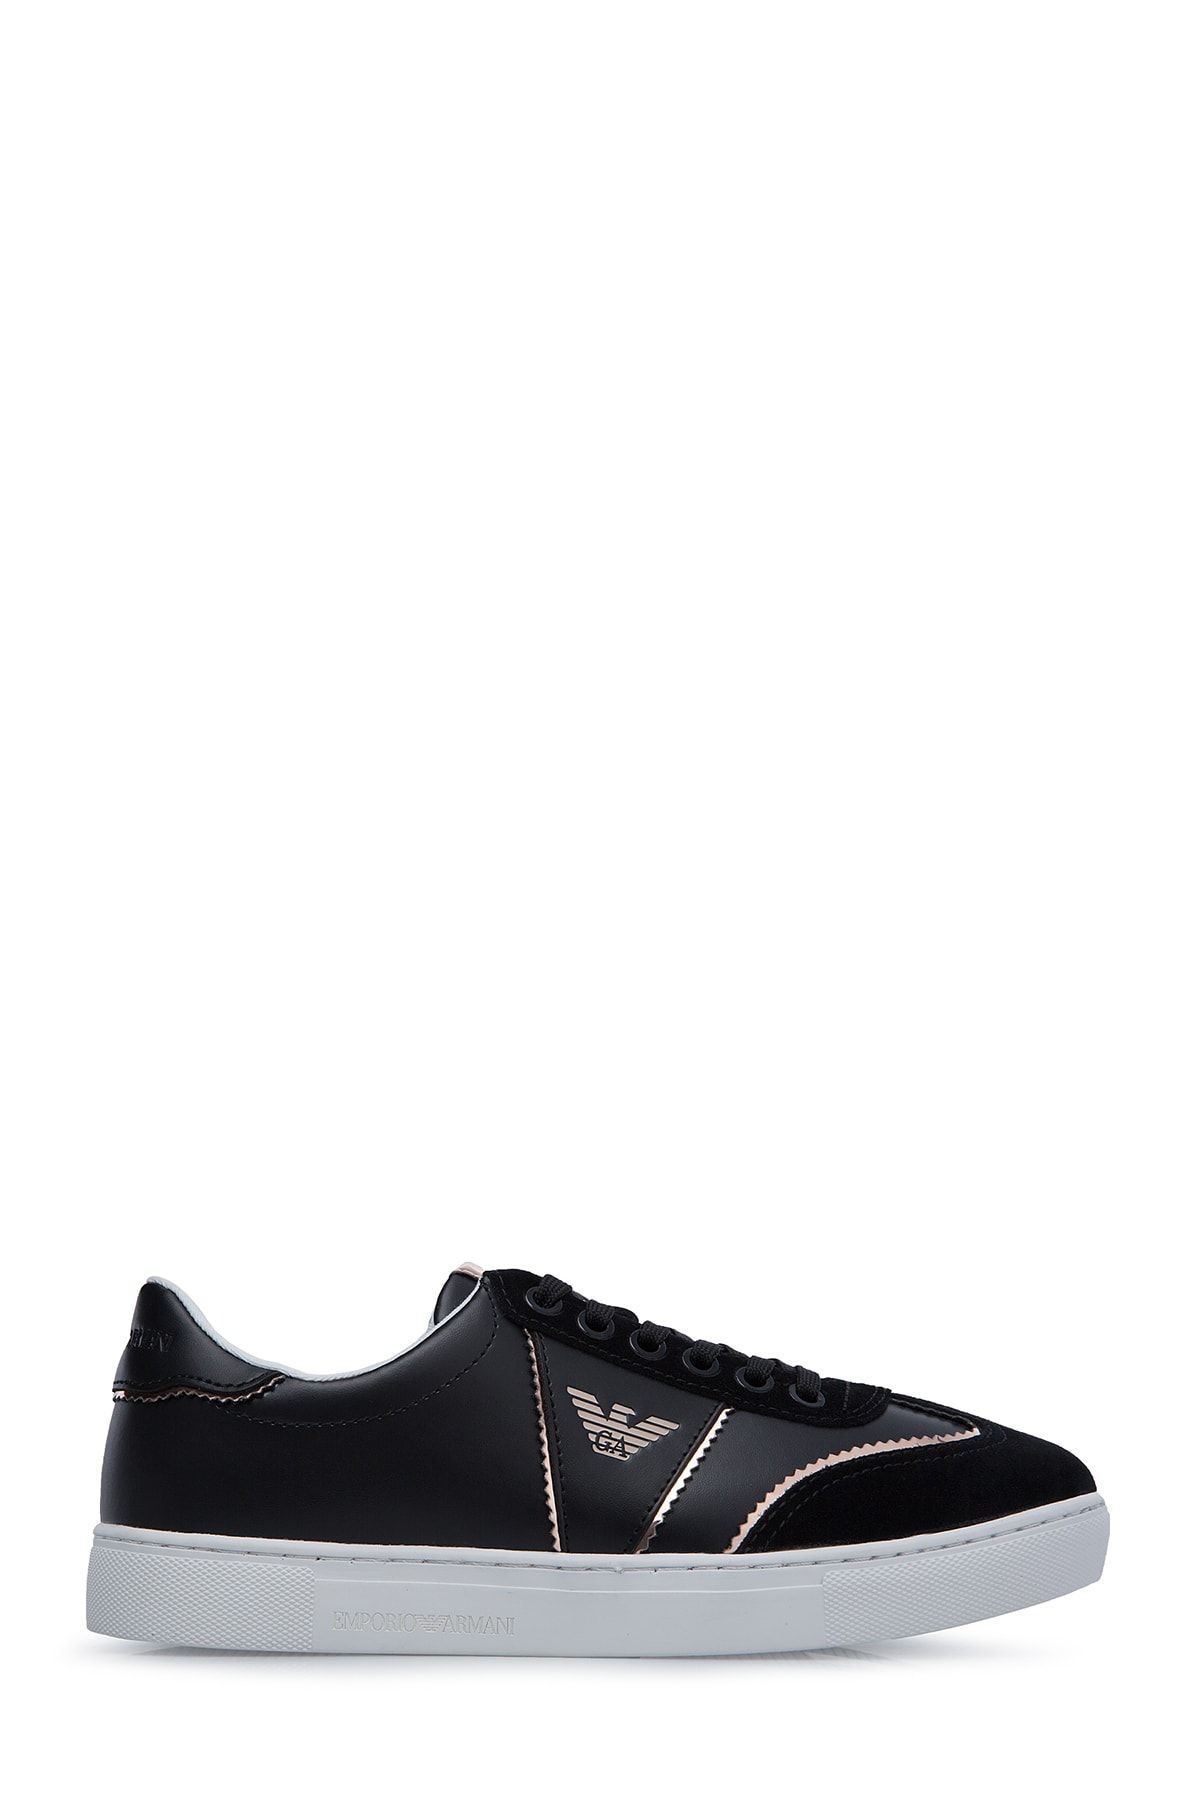 Emporio Armani Kadın Siyah Sneaker S X3X083 XL842 A327